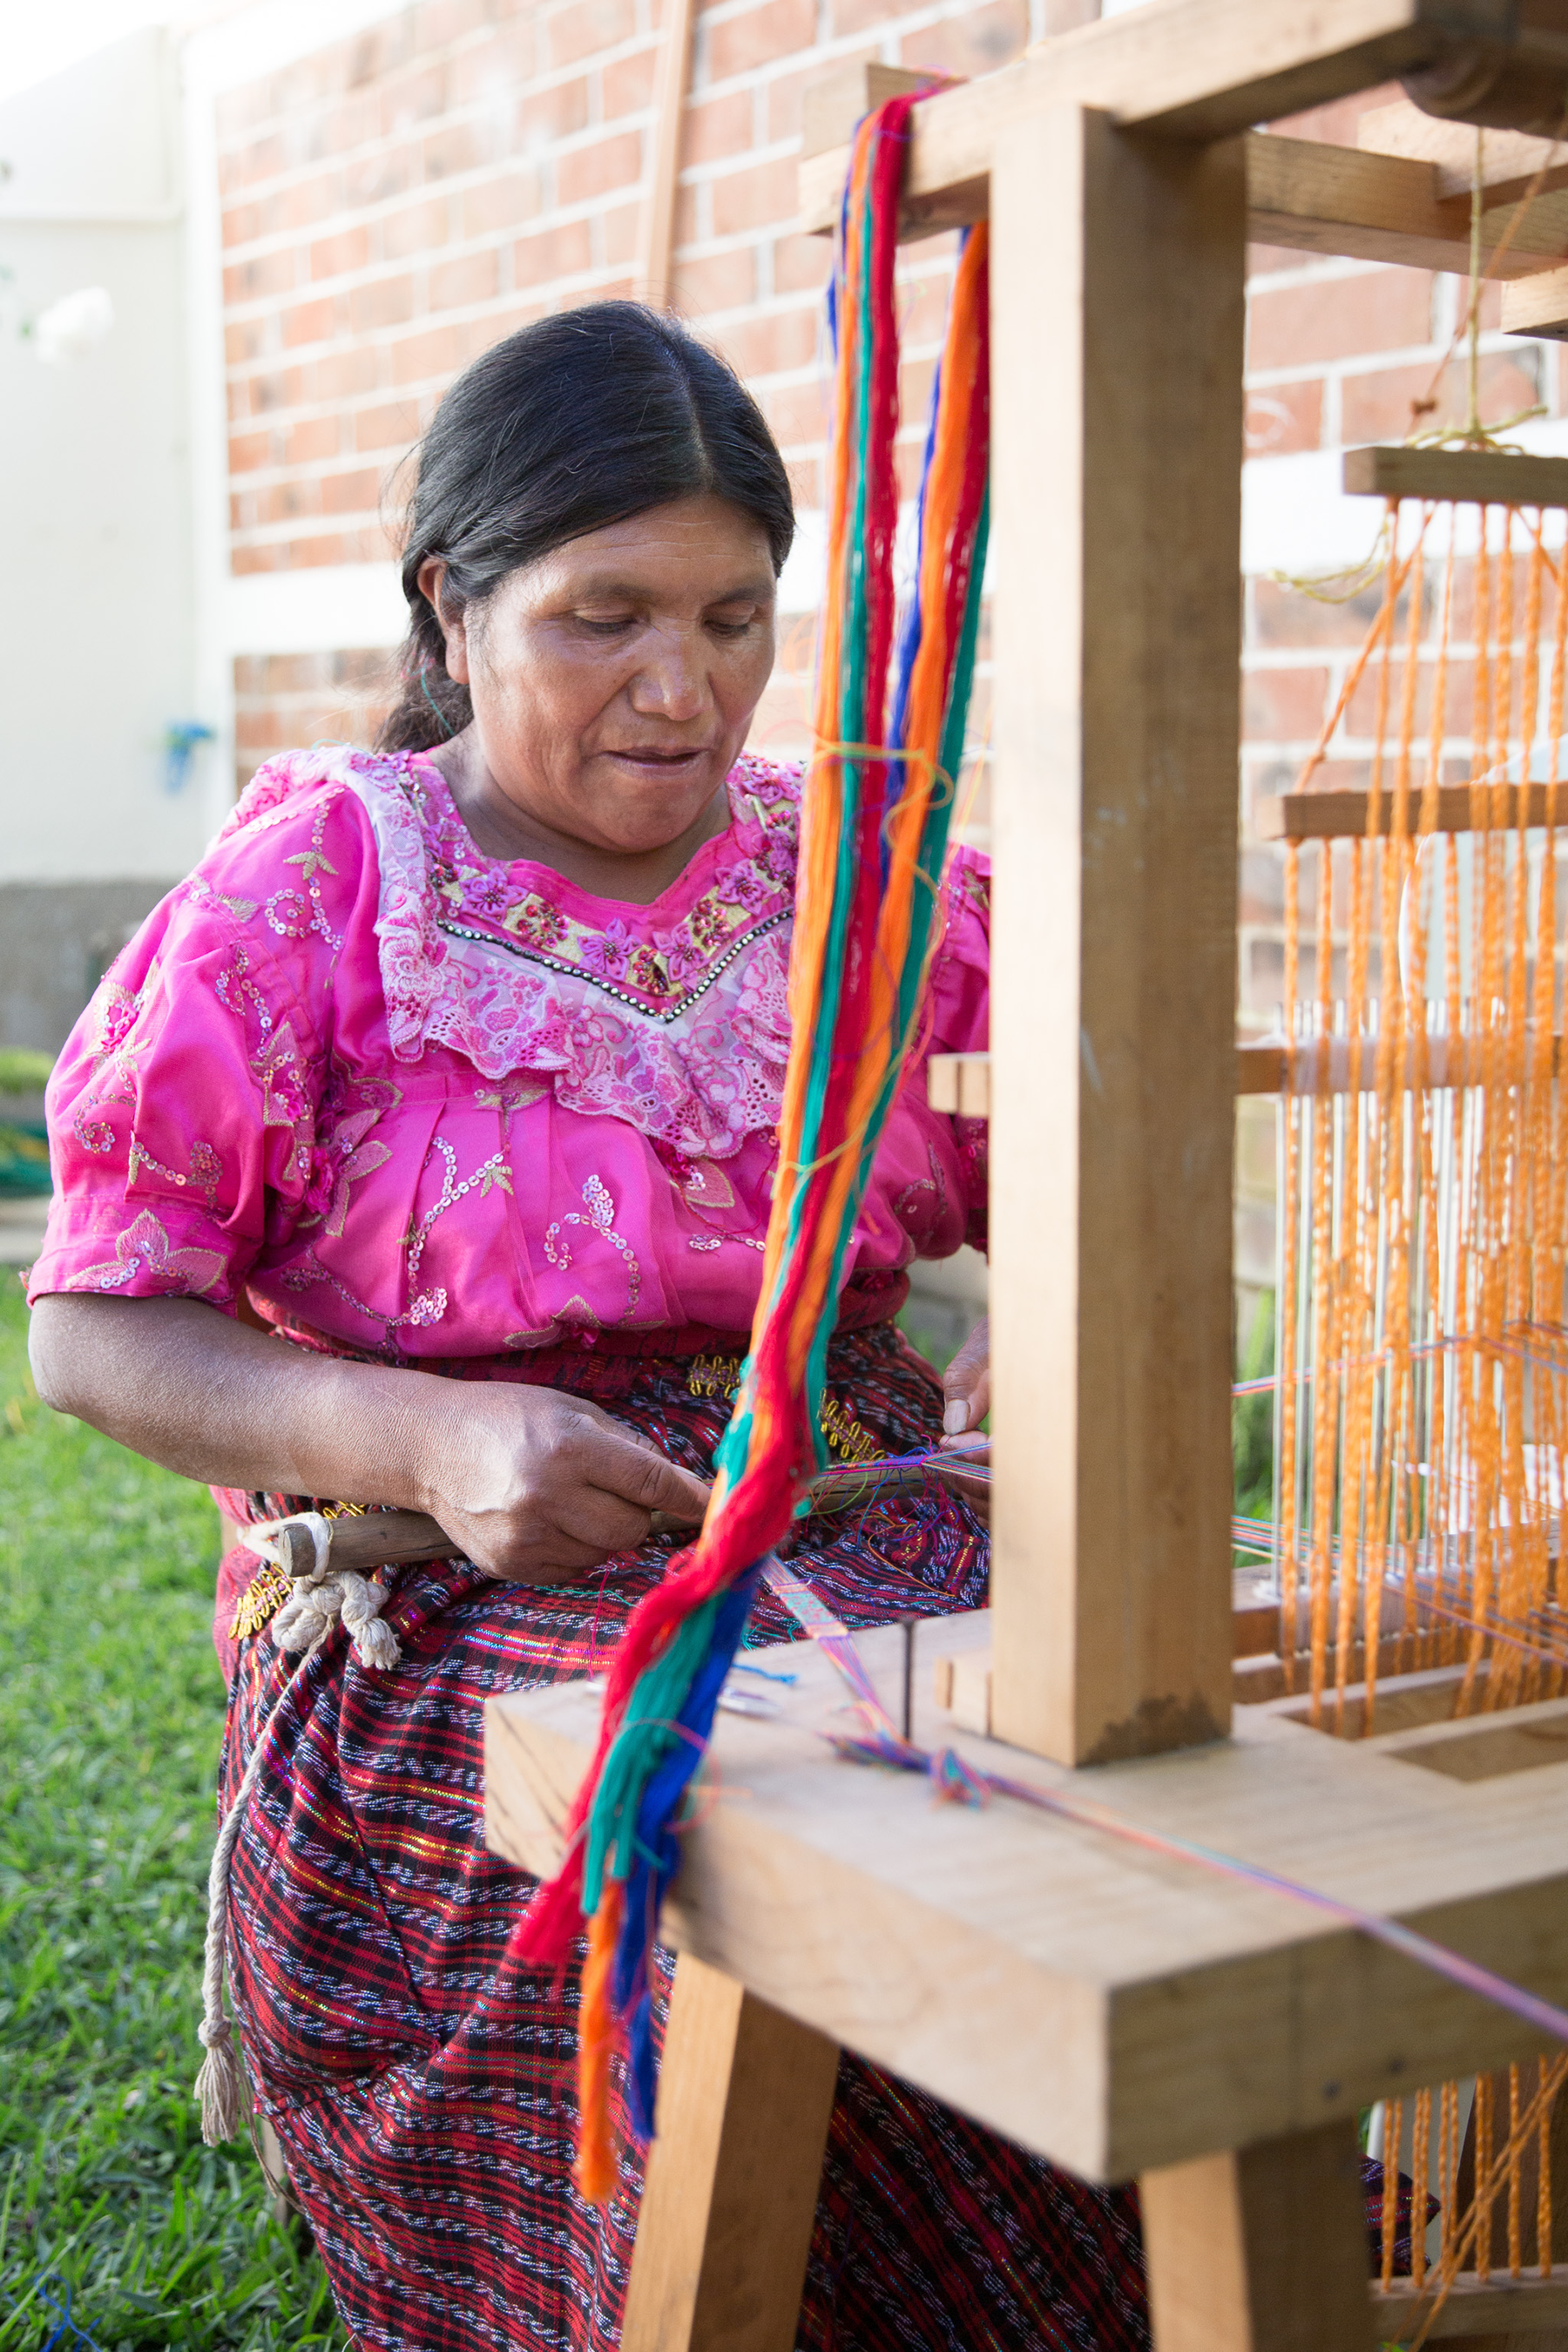 Mayan women weaving on a cinta loom in Panajachel